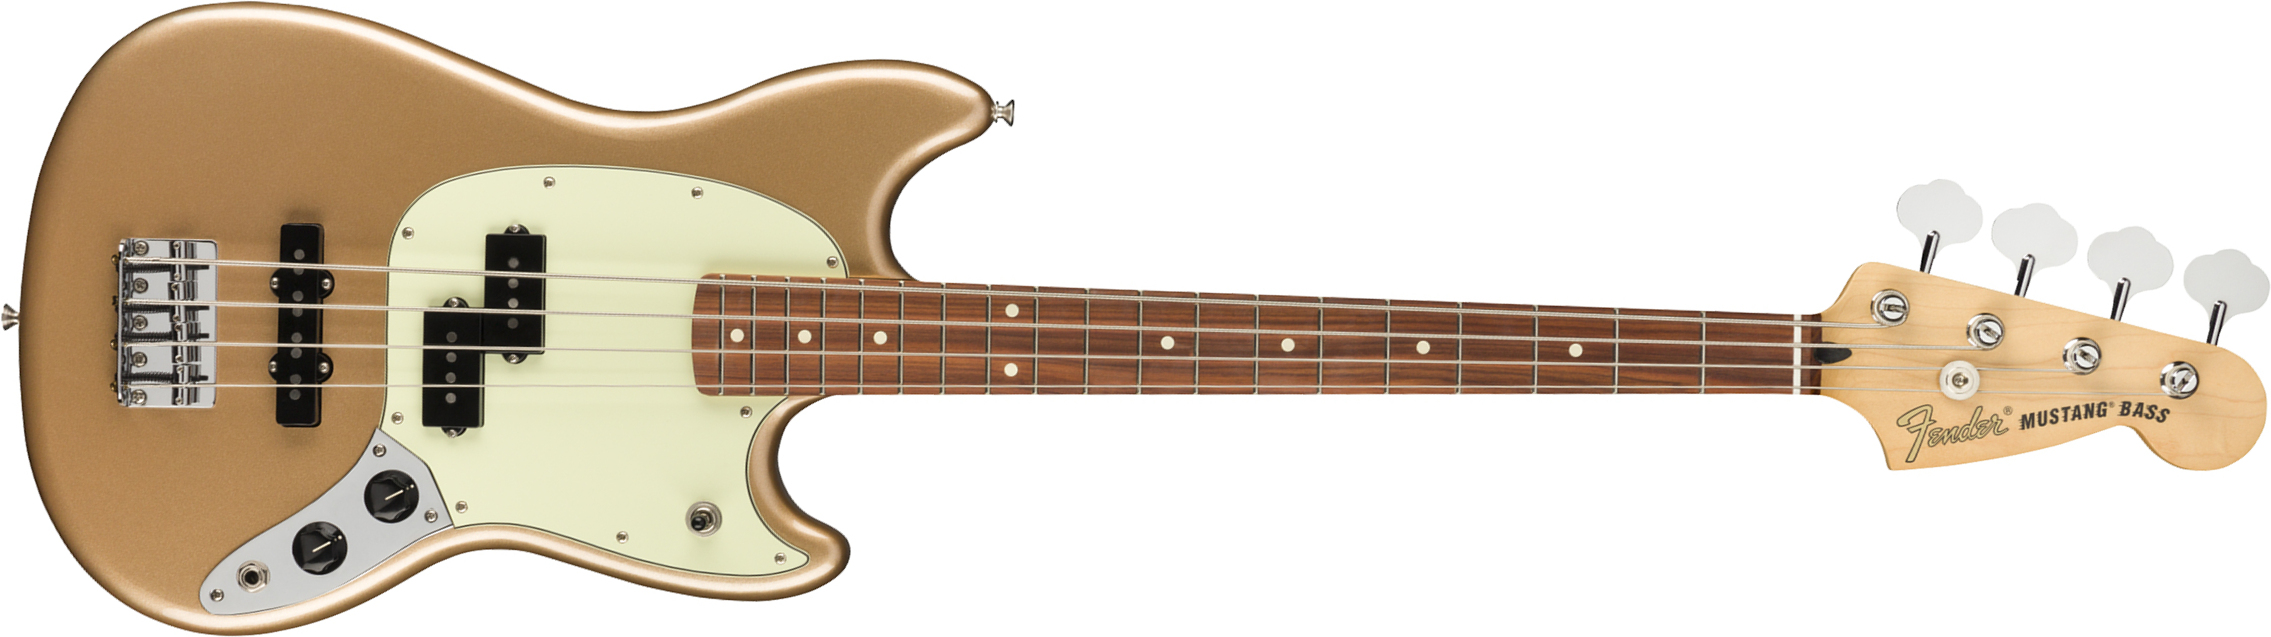 Fender Player Mustang Bass Mex Pf - Firemist Gold - Short scale elektrische bas - Main picture